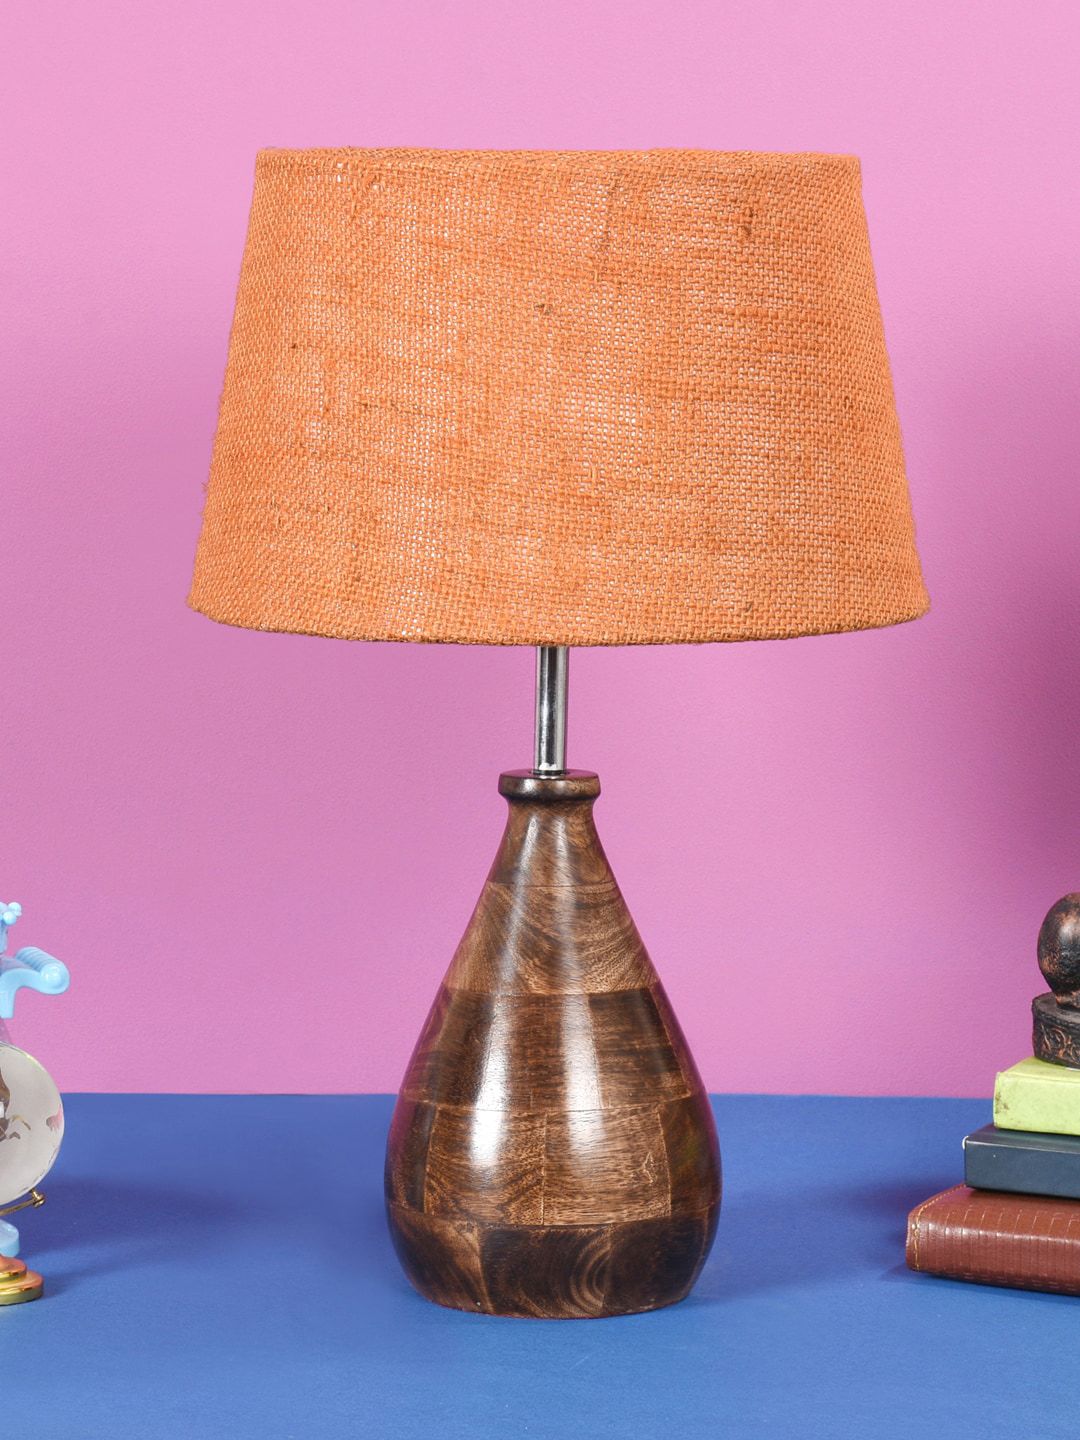 Foziq Brown & Orange Solid Wood Table Lamp Price in India